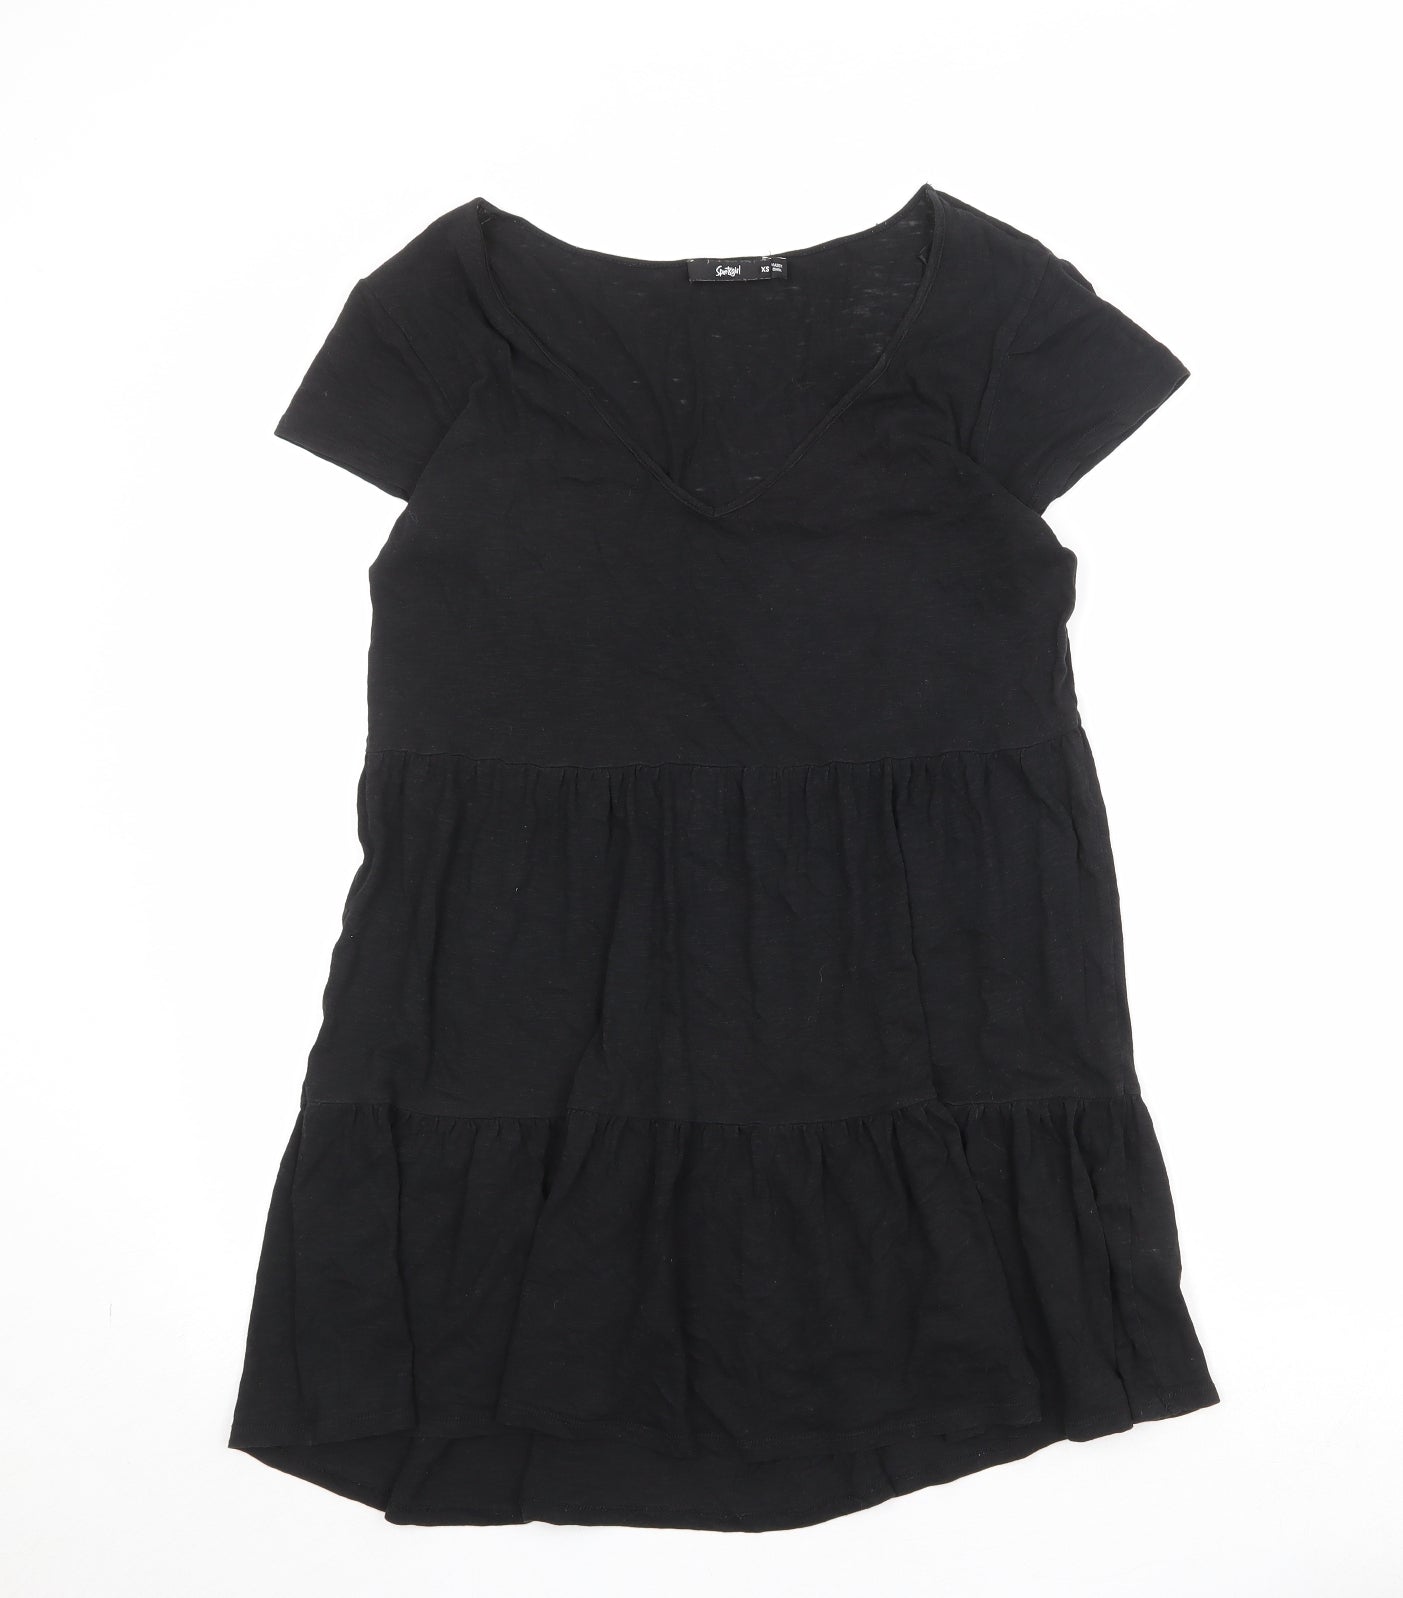 Sportsgirl Womens Black 100% Cotton T-Shirt Dress Size XS V-Neck Pullover